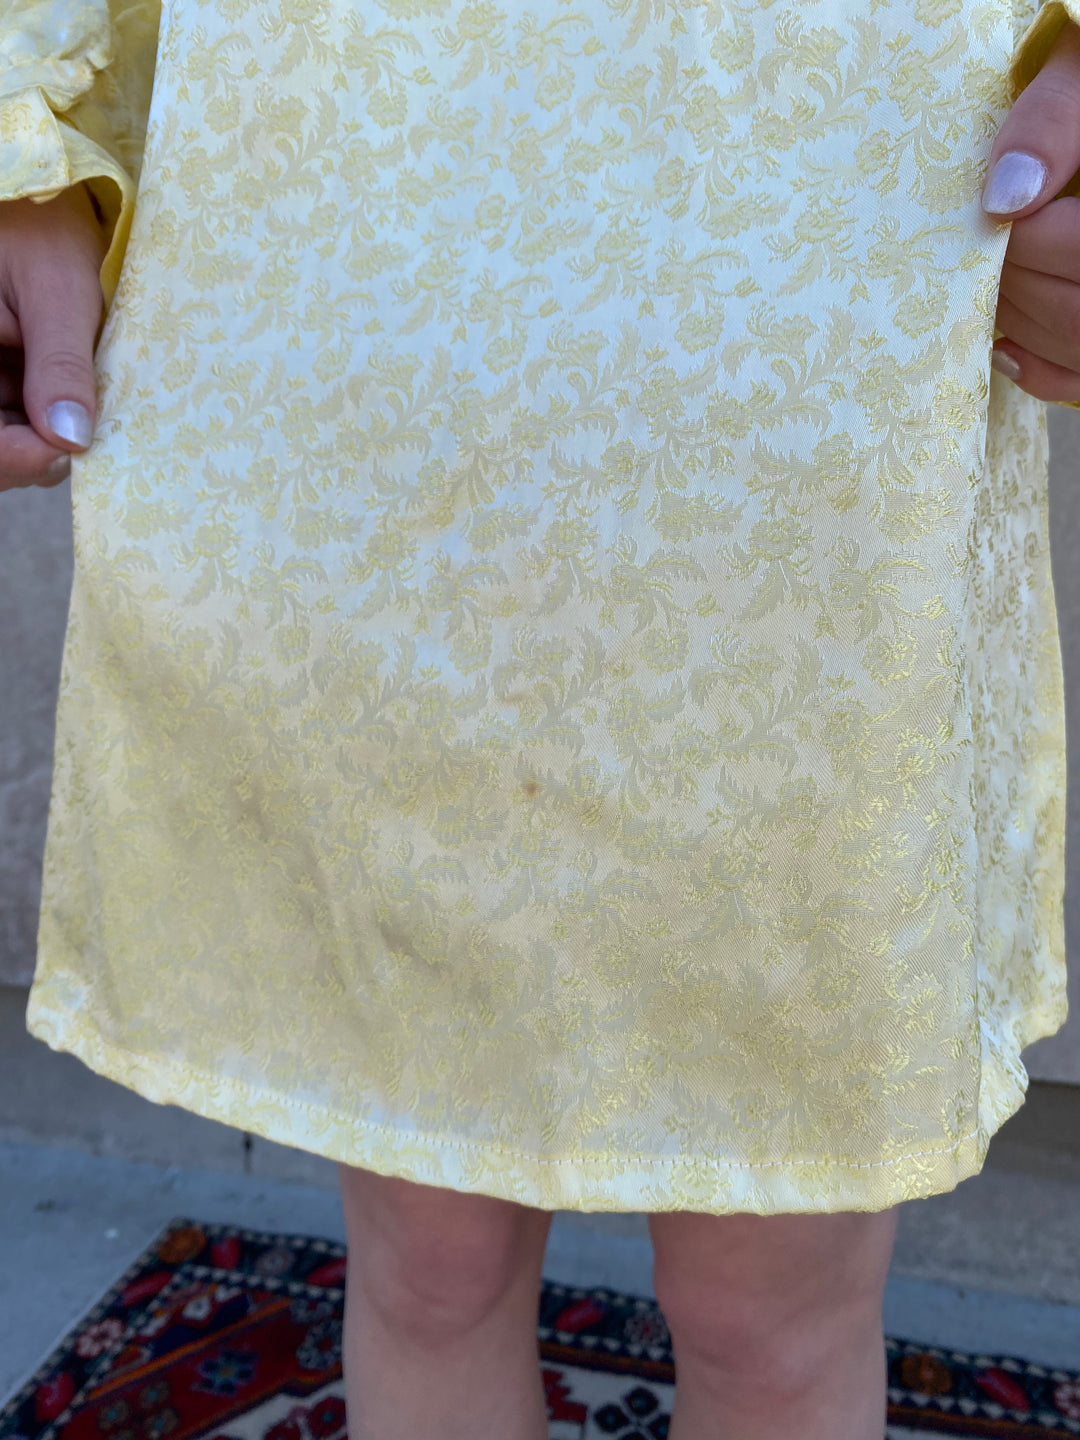 60s Yellow Brocade Mini Dress